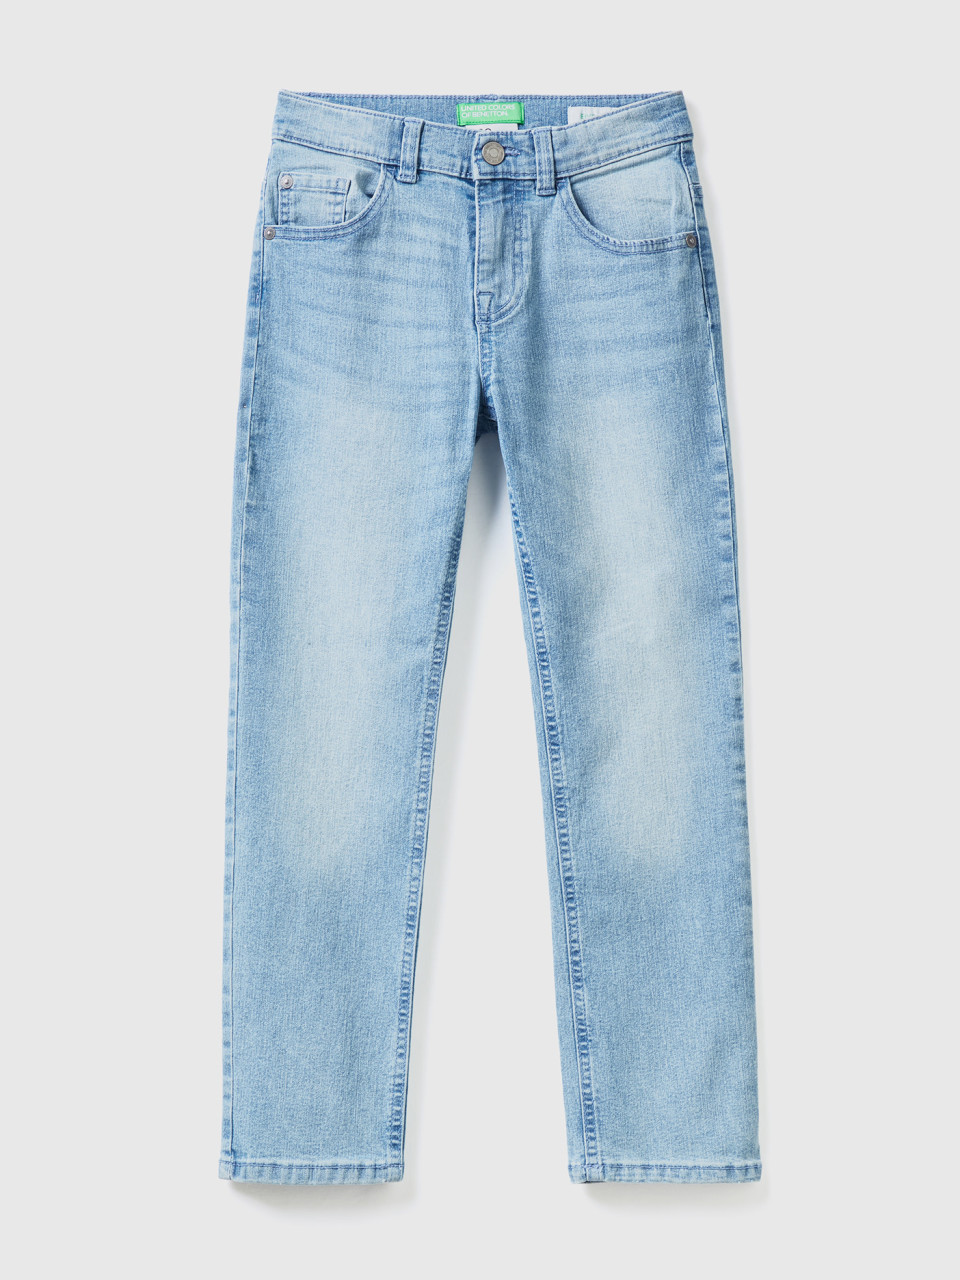 Benetton, Slim-fit-jeans eco-recycle, Blassblau, male